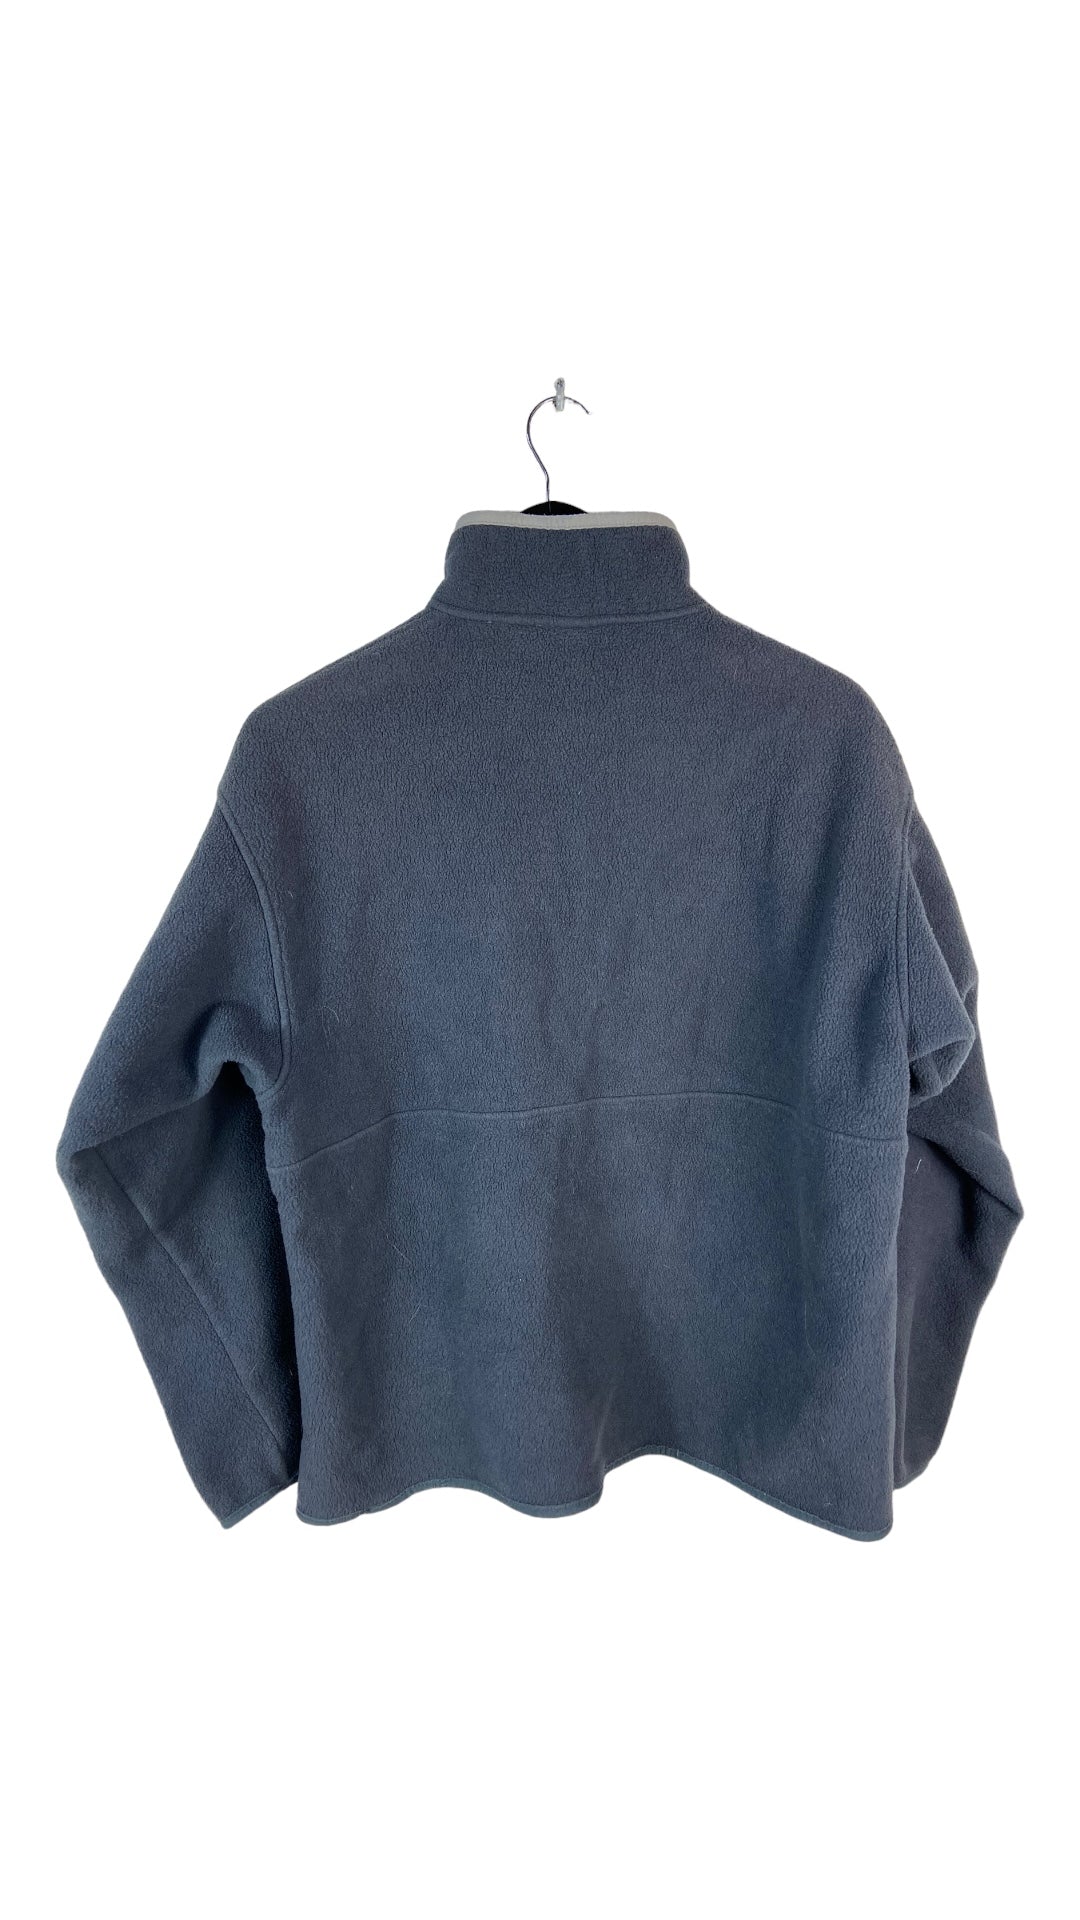 VTG Patagonia Synchilla Fleece Two-Thirds Zip Sweater Sz L